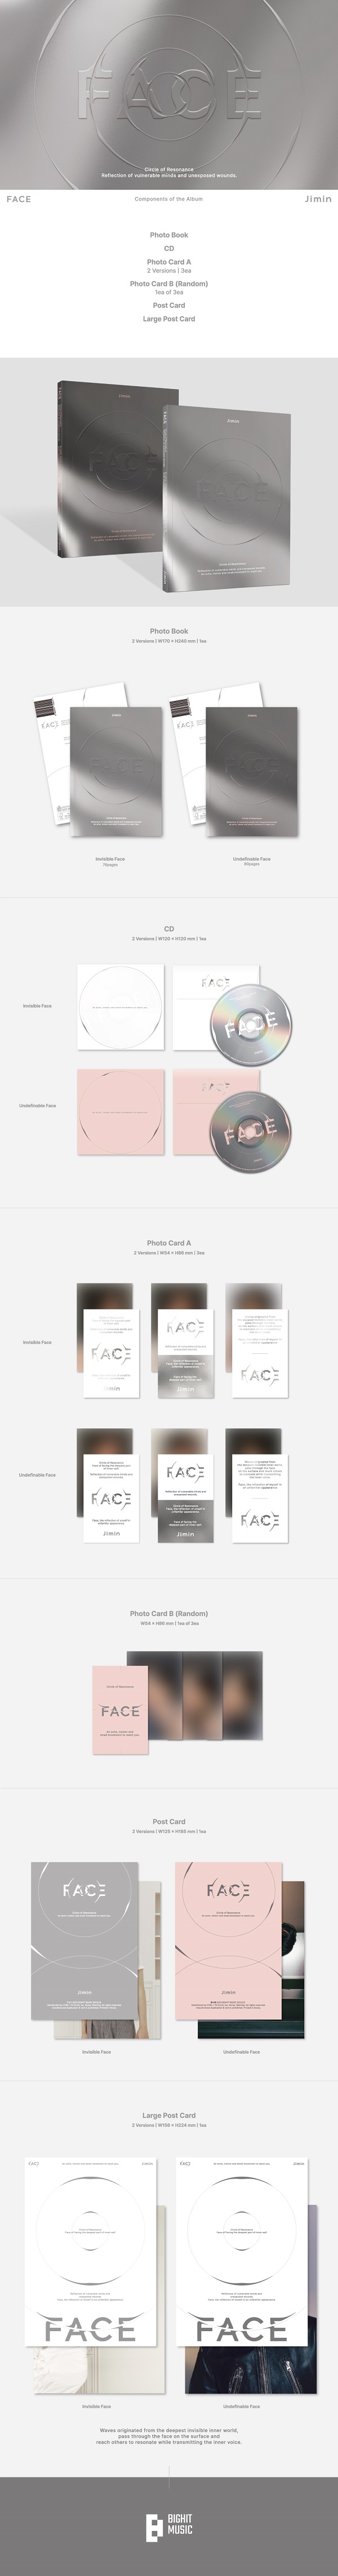 JIMIN (ジミン / BTS)｜ソロアルバム『FACE』CD＆Weverse Albumで